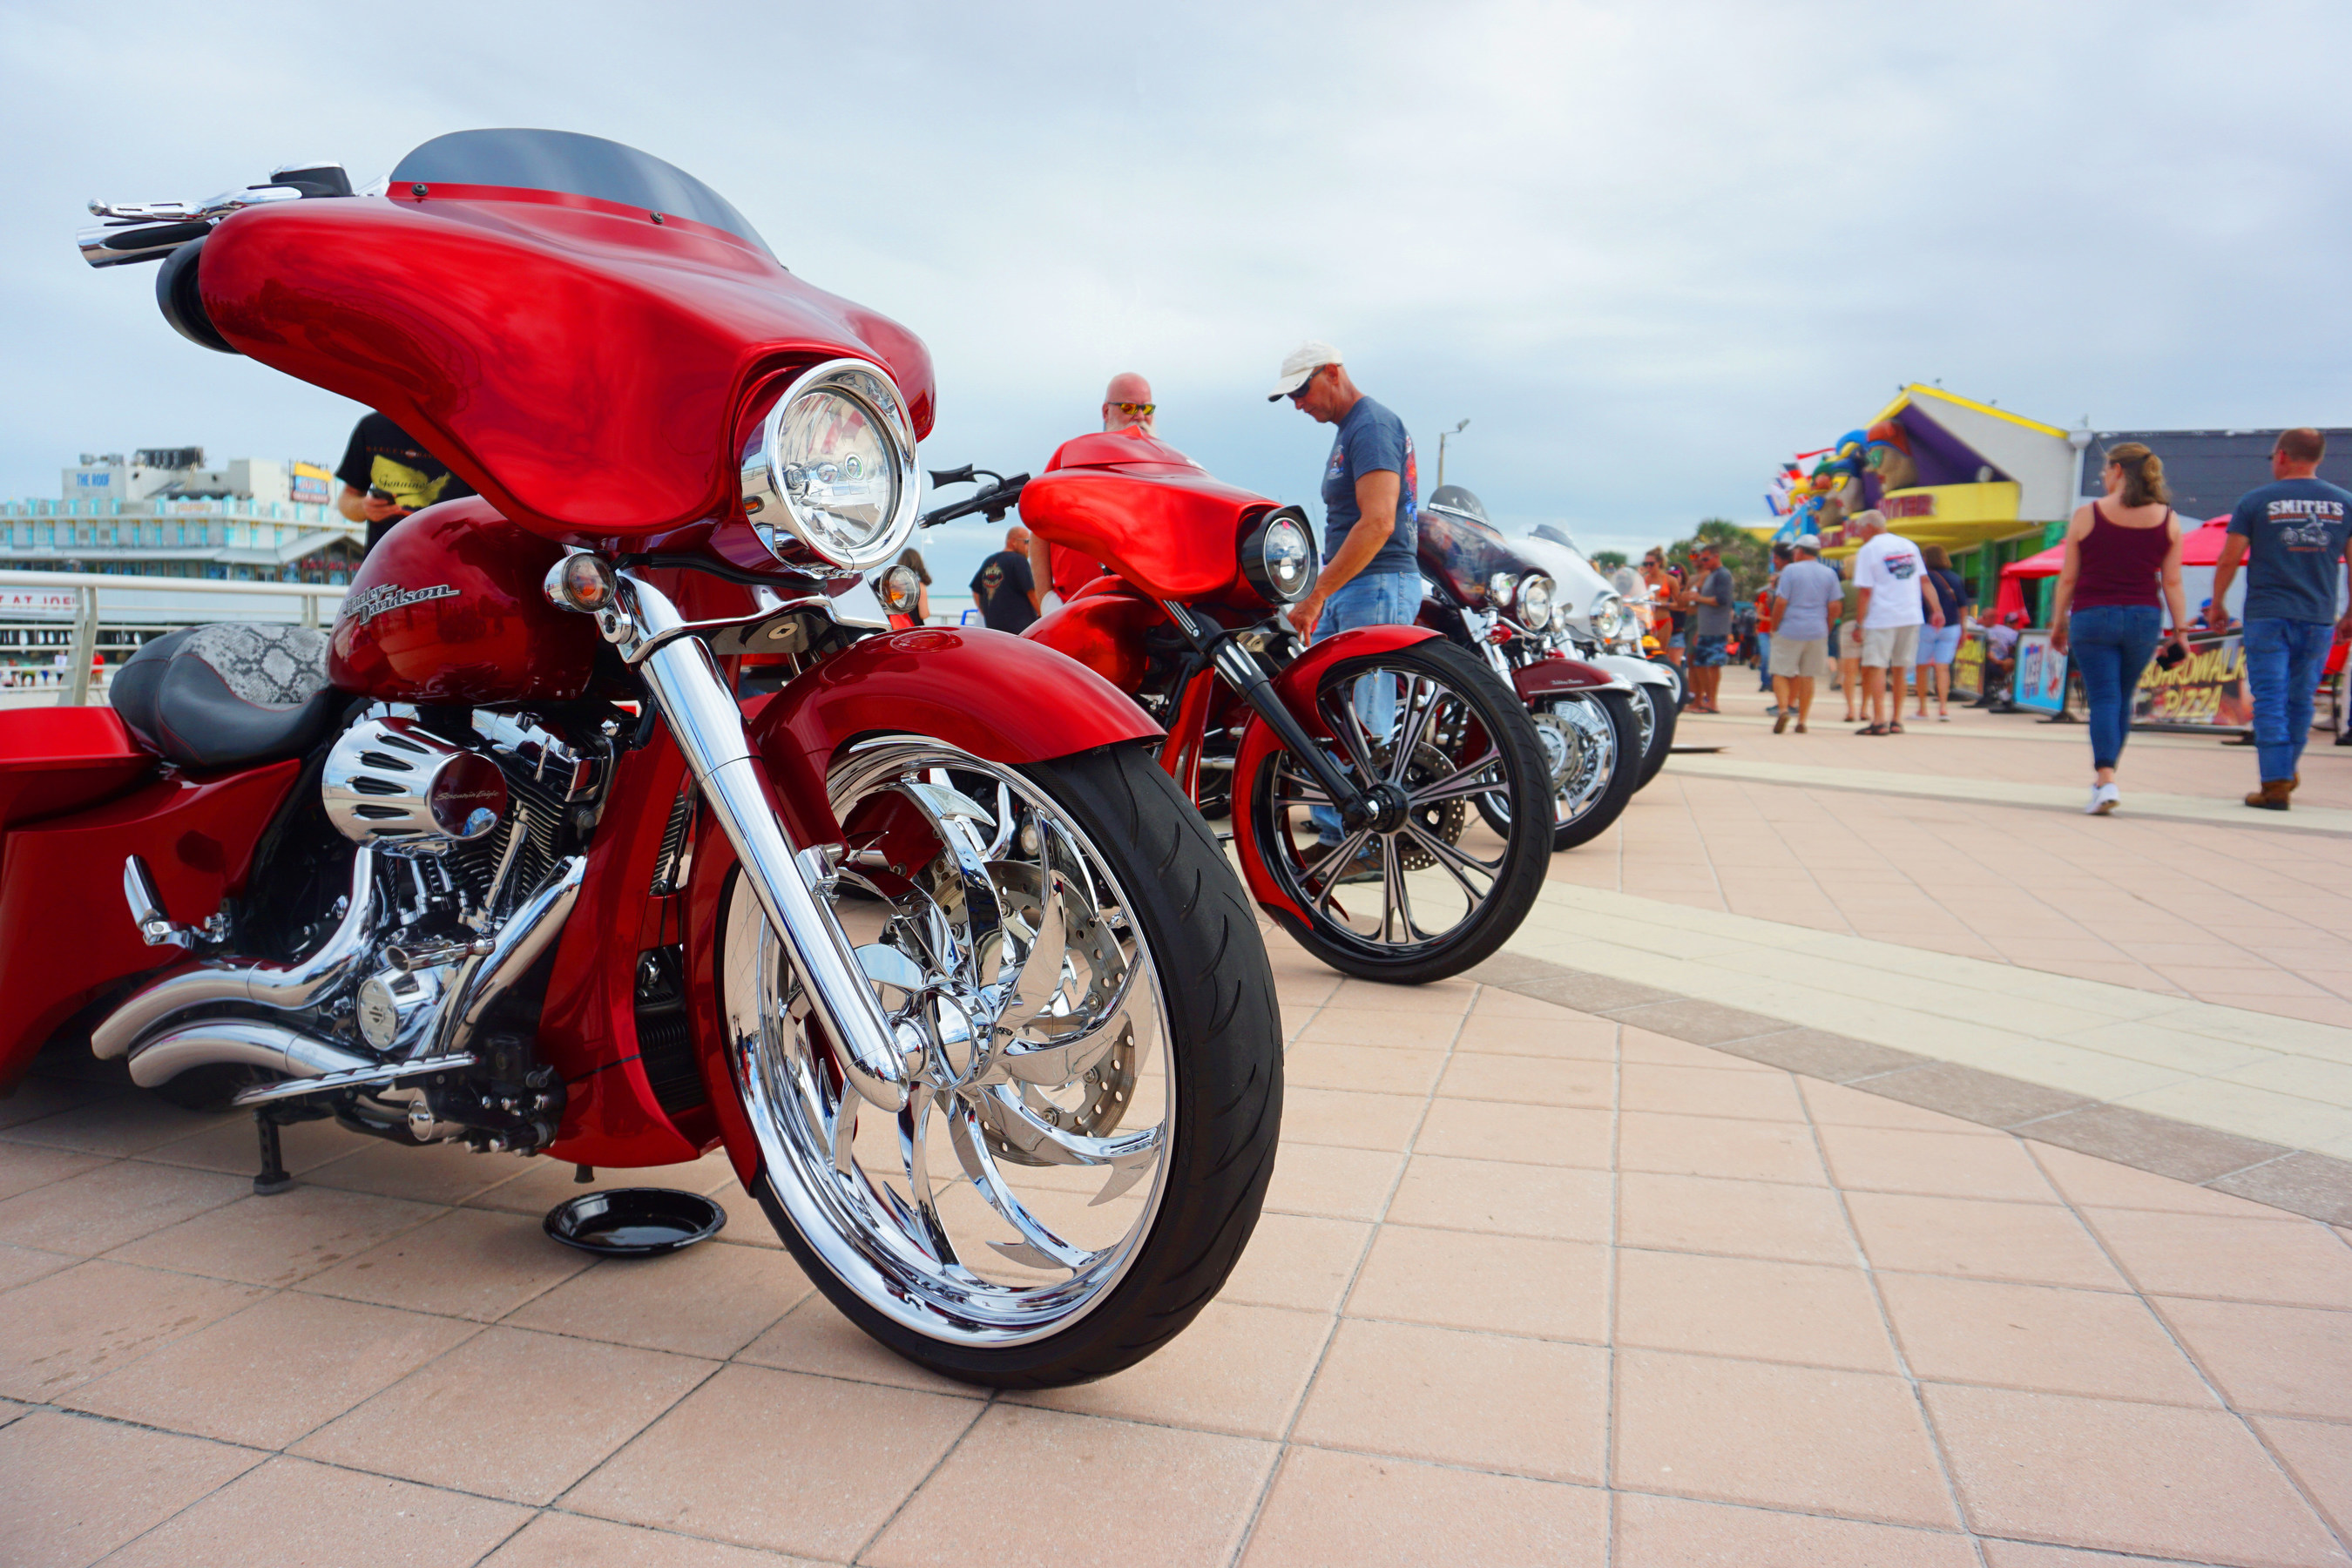 2019 Motorcycle Rallies In Daytona Beach